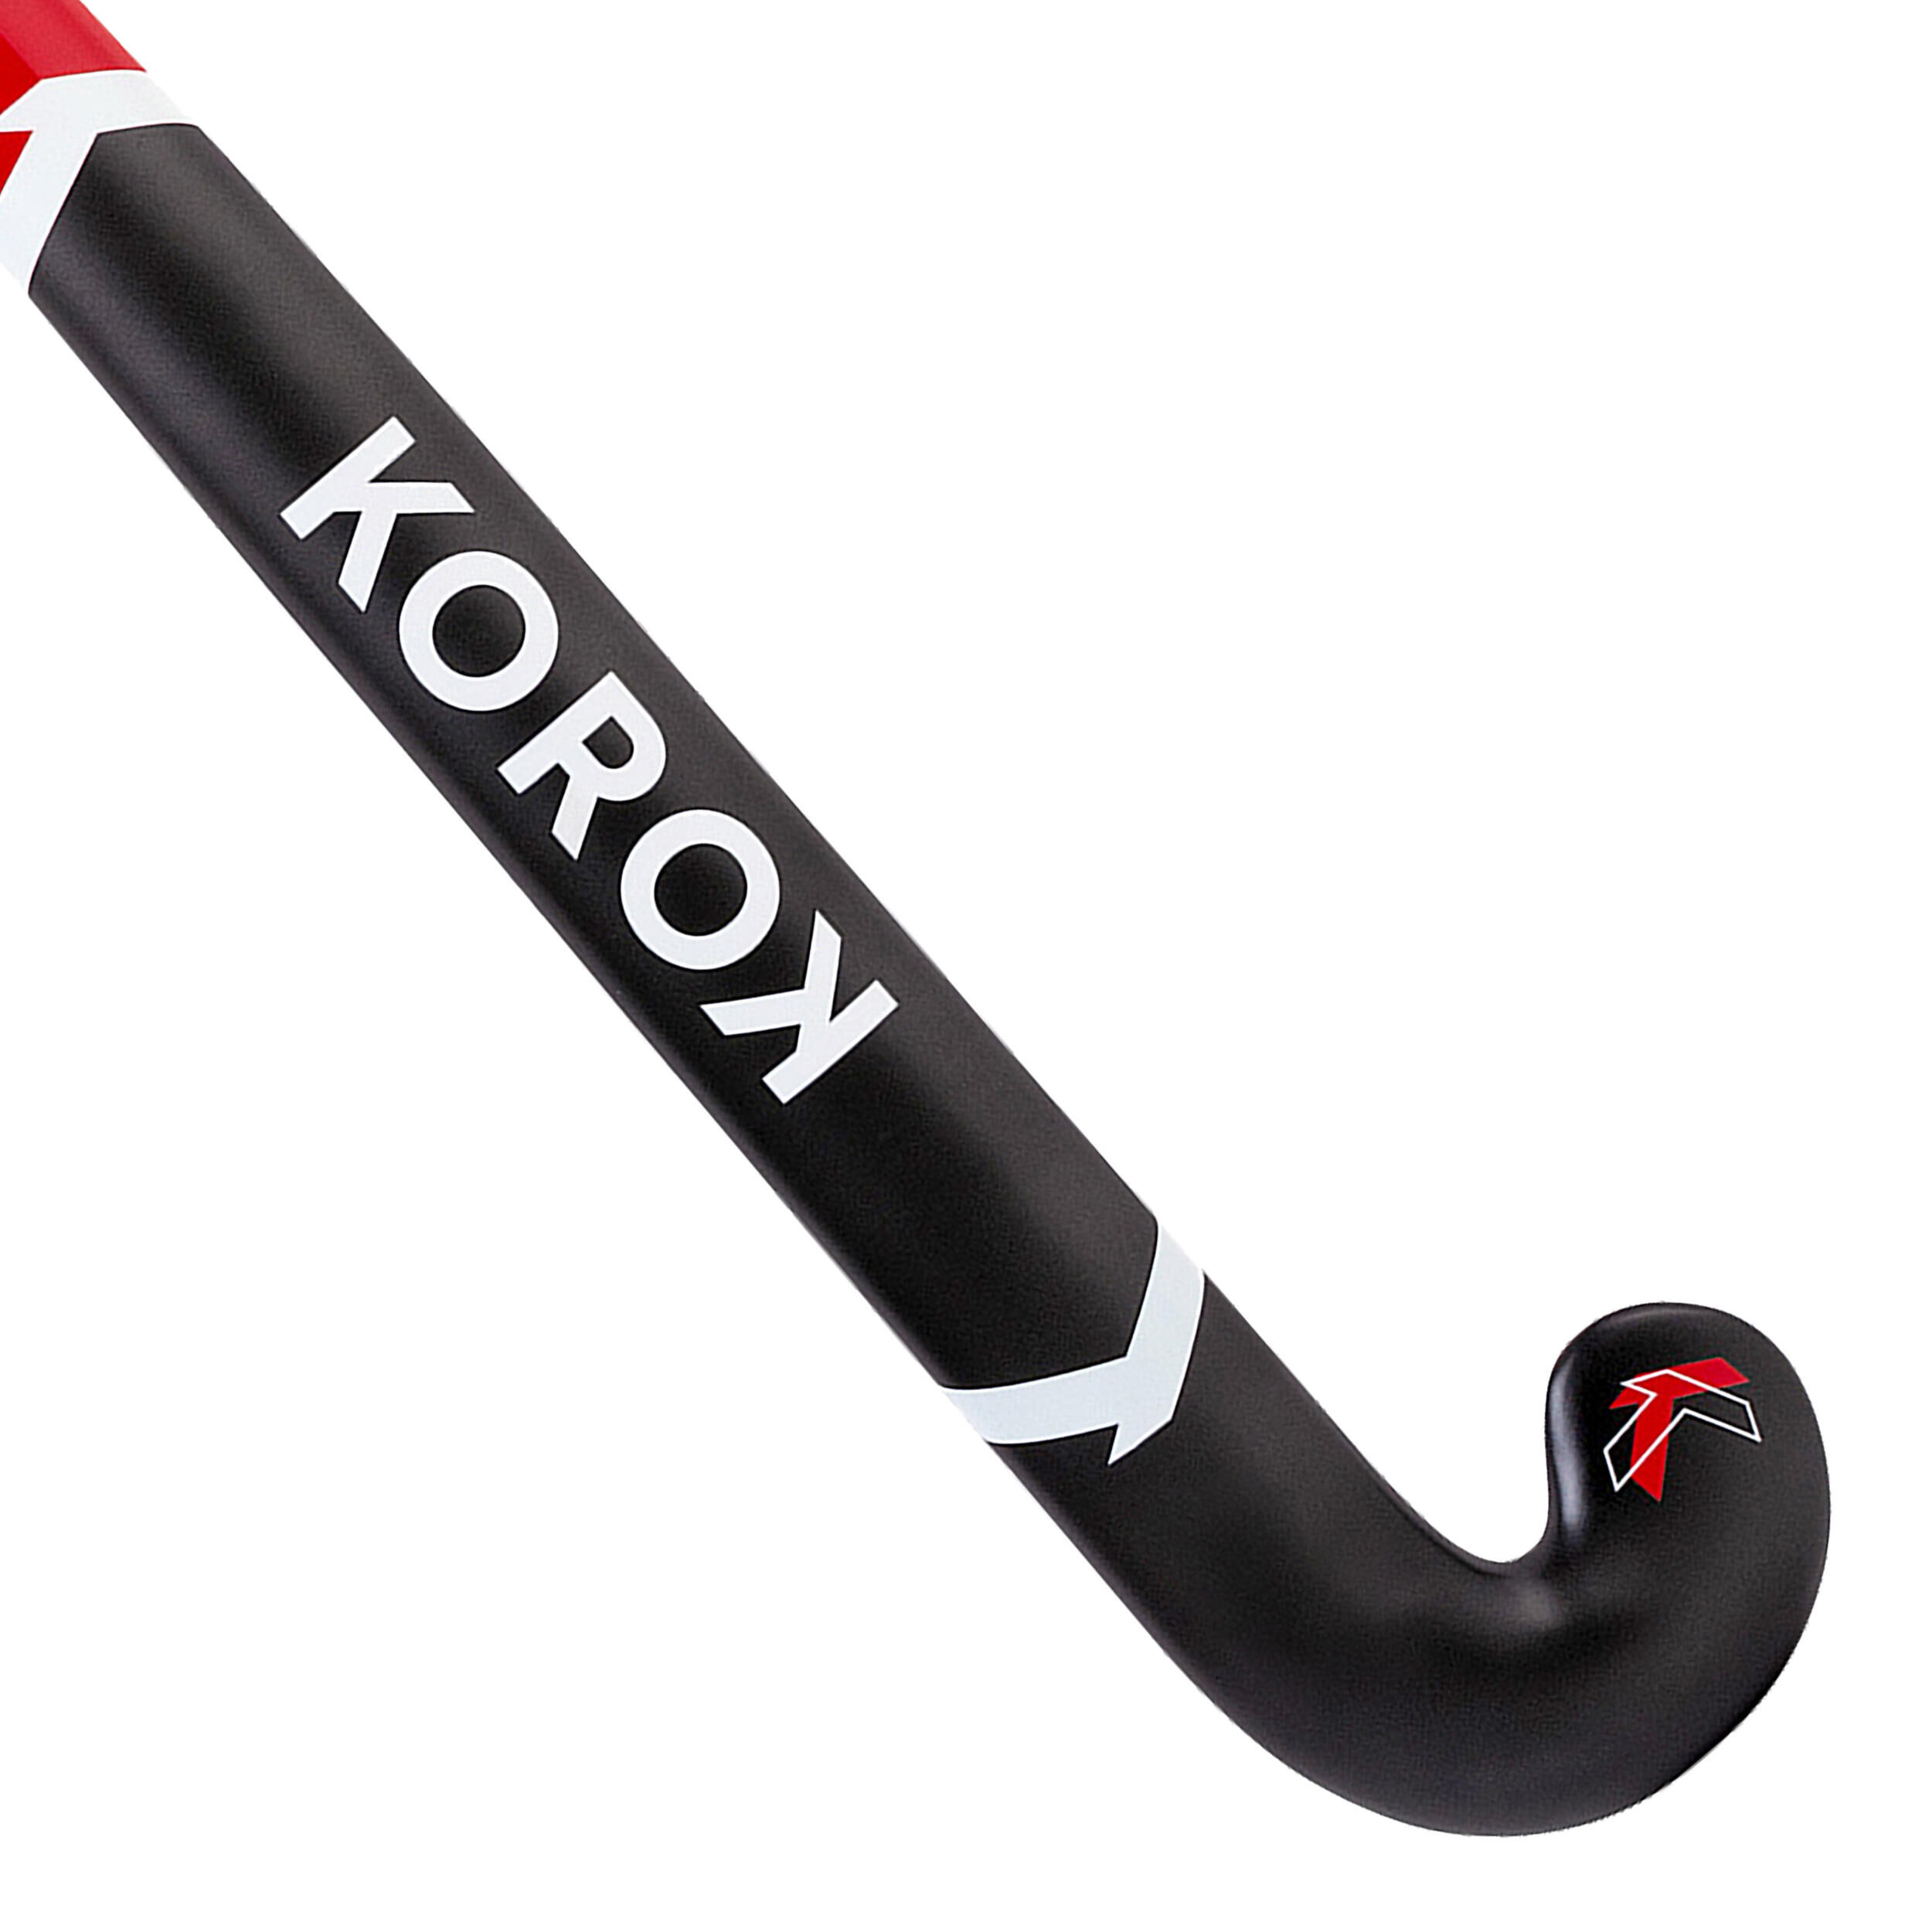 KOROK Adult Beginner Mid Bow Fibreglass Field Hockey Stick FH500 - Red